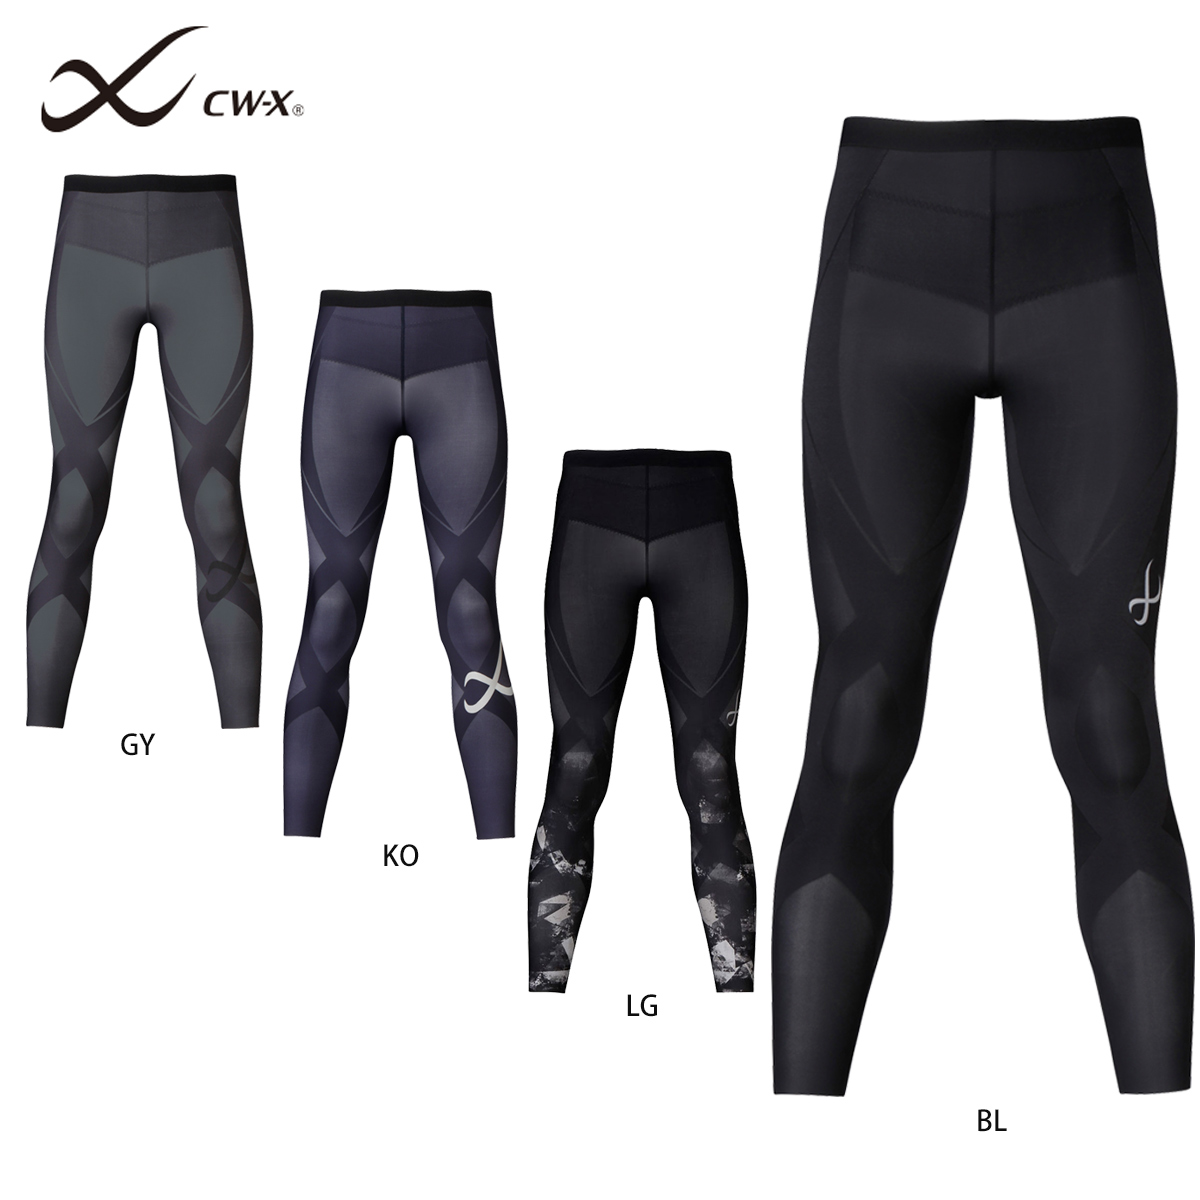 CW-X Gray Athletic Leggings for Women